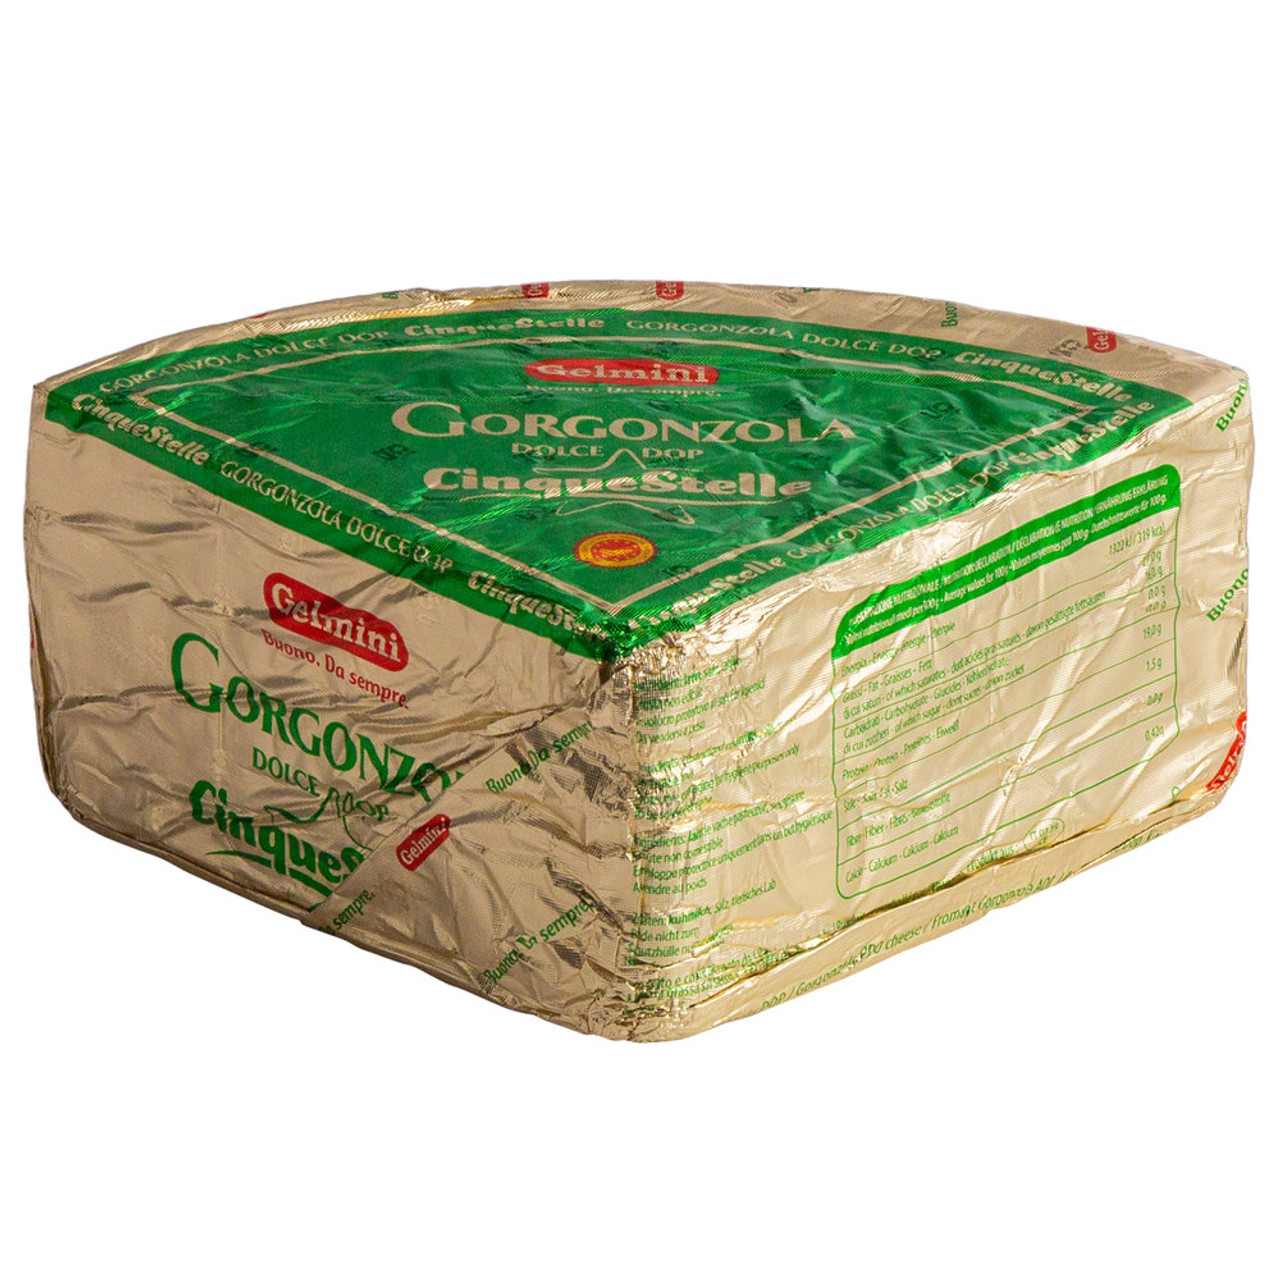 GORGONZOLA1__cheese img1 (1)